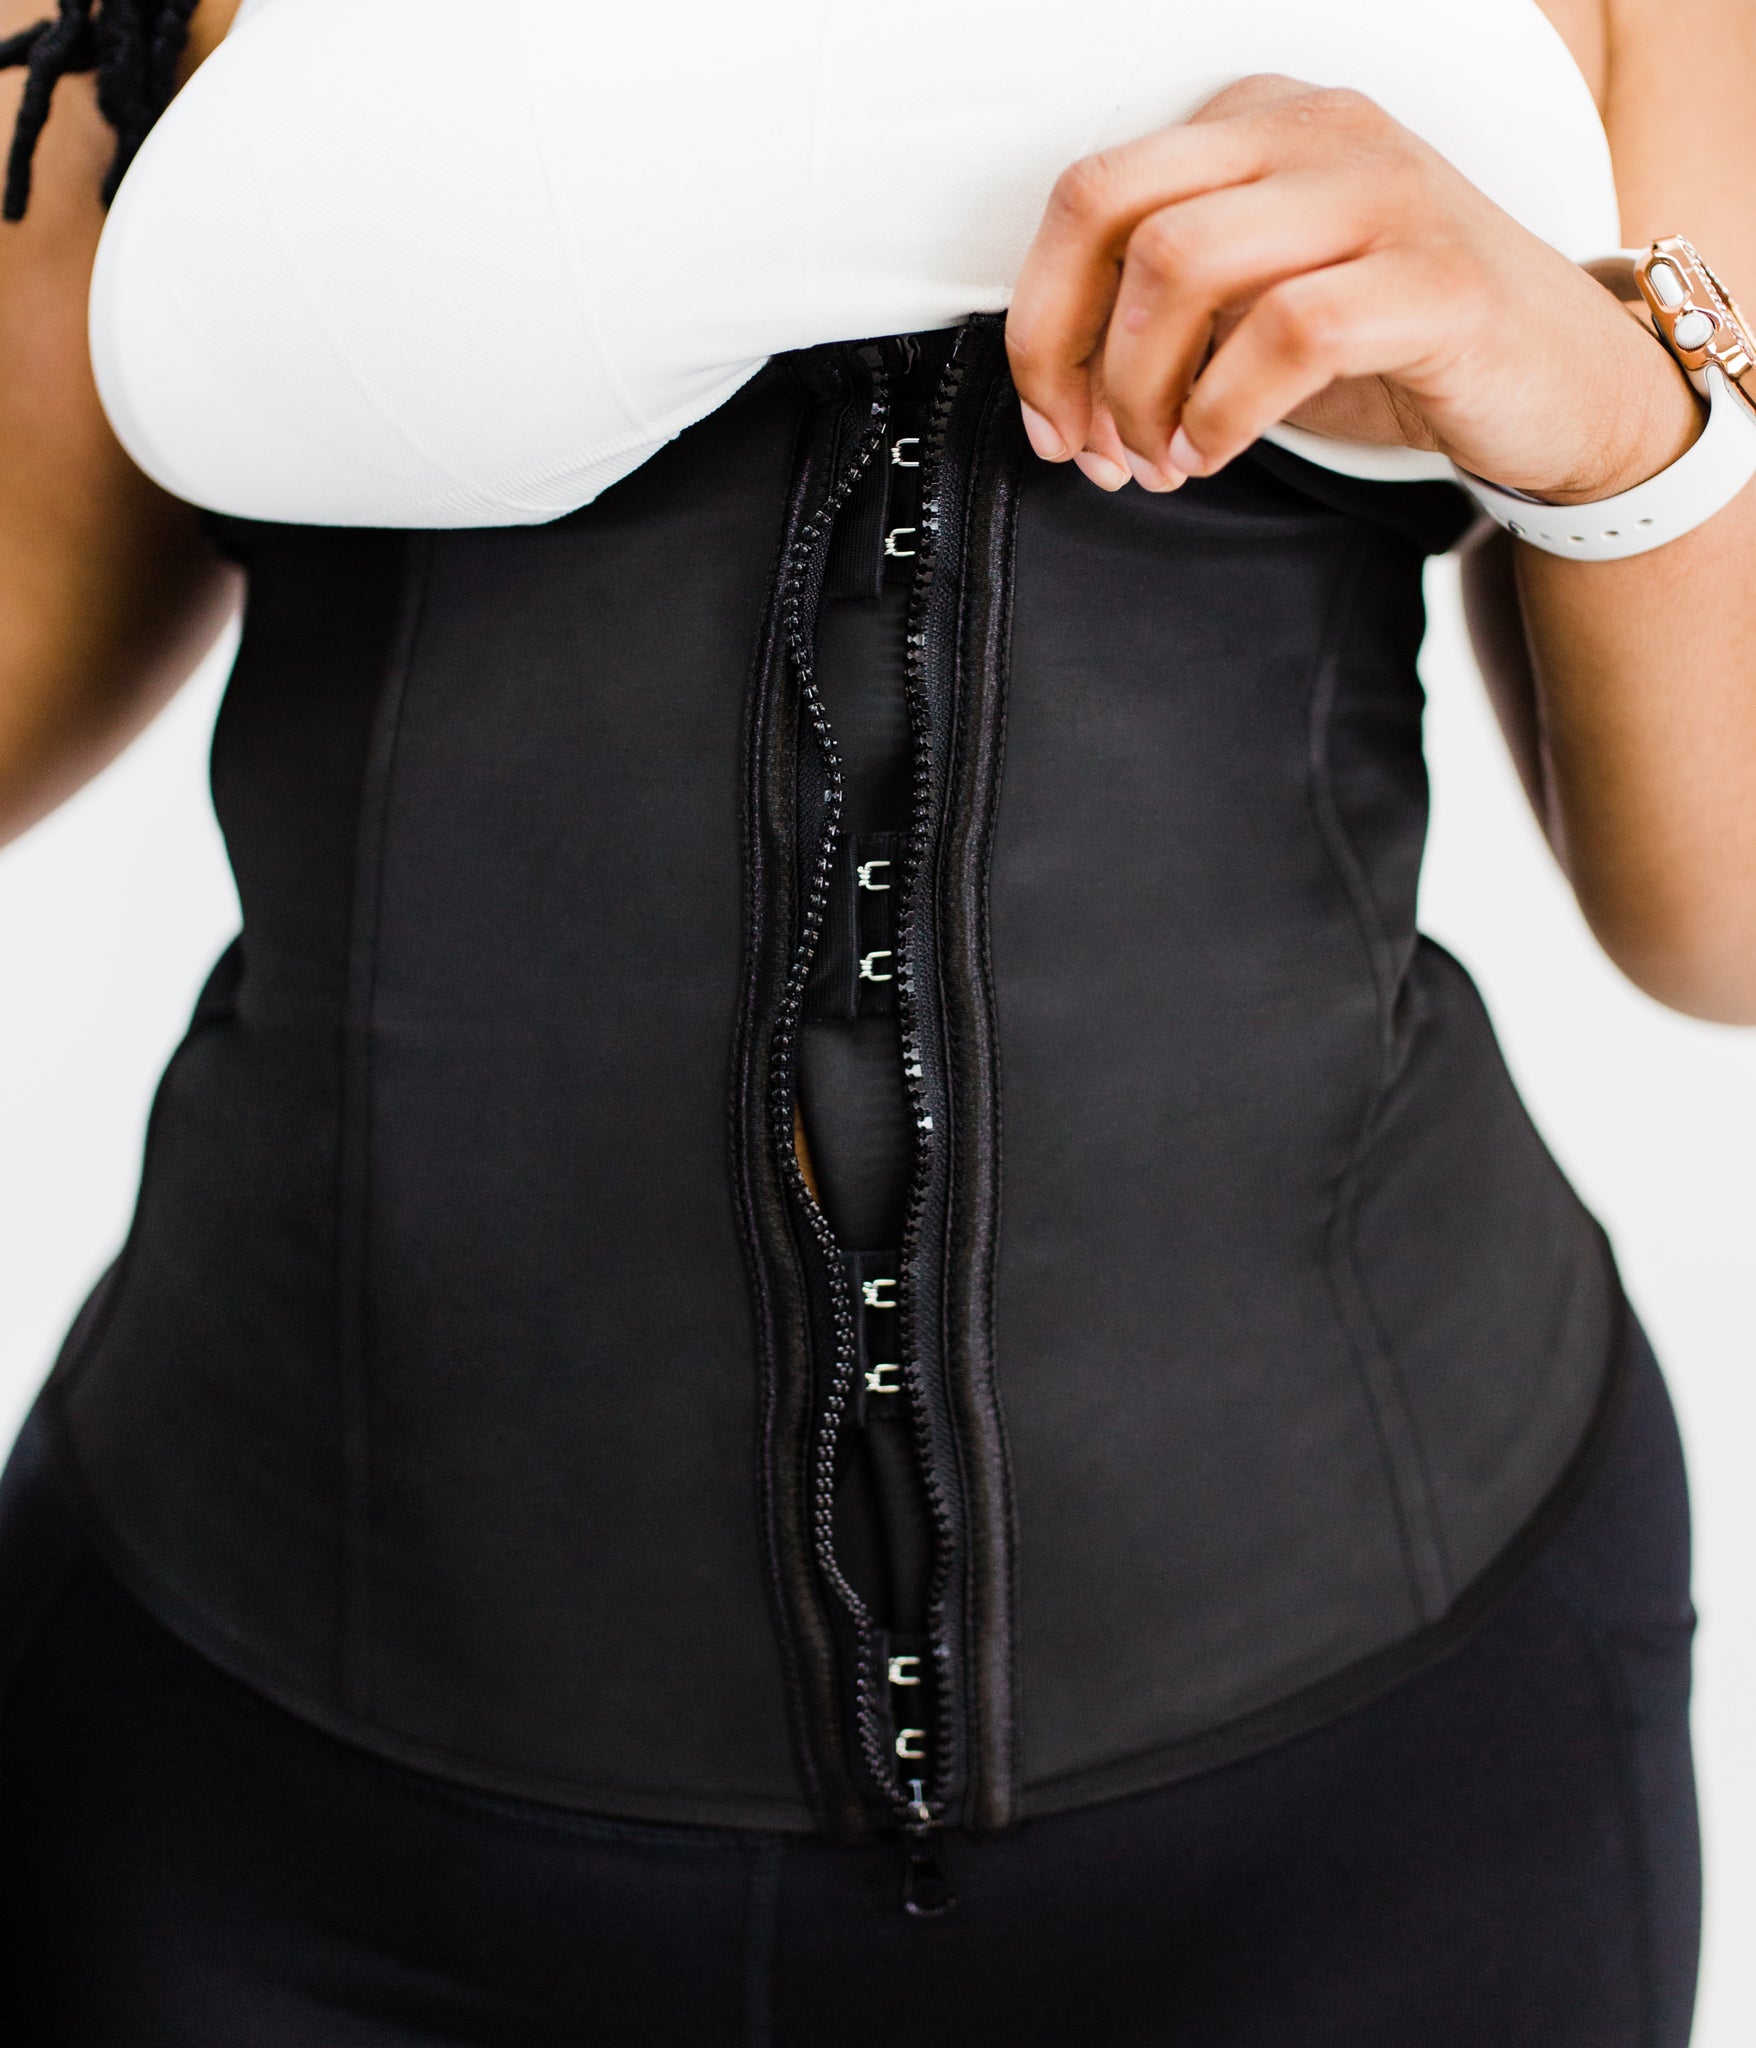 GainKee Waist Trainer for Women Zip Trimmer Belts Detachable Two